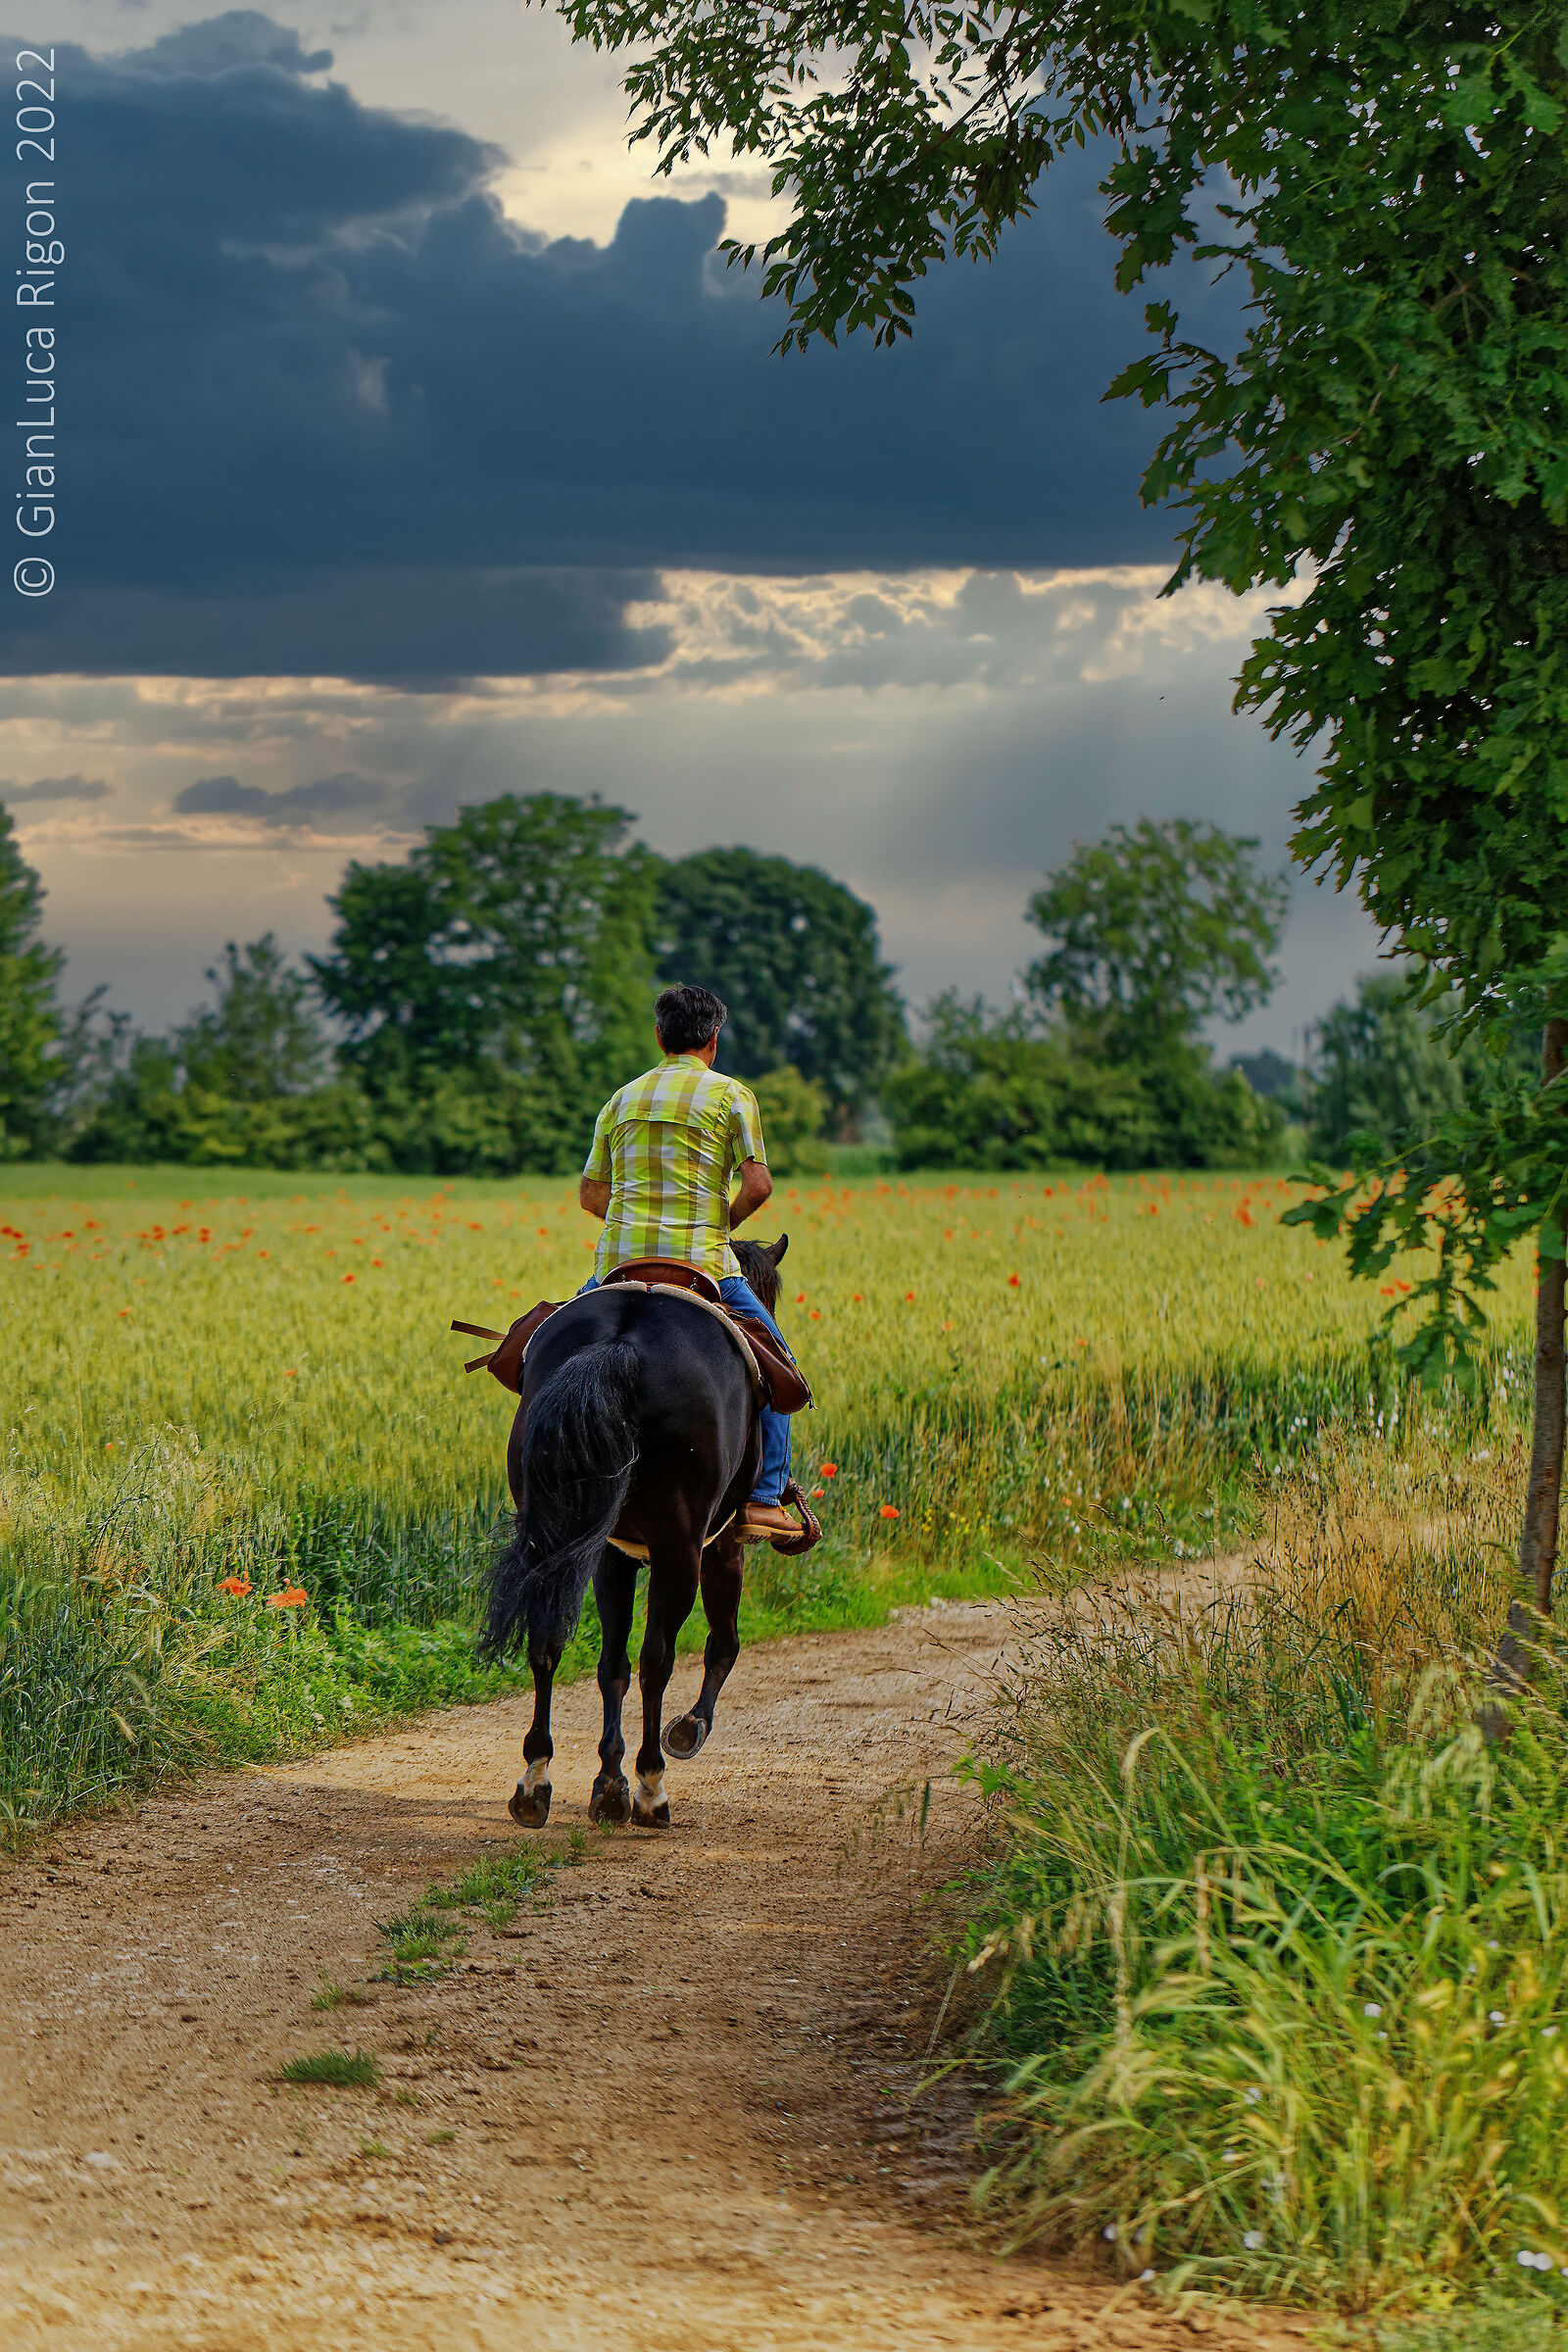 Horseback riding through the Vicenza countryside...